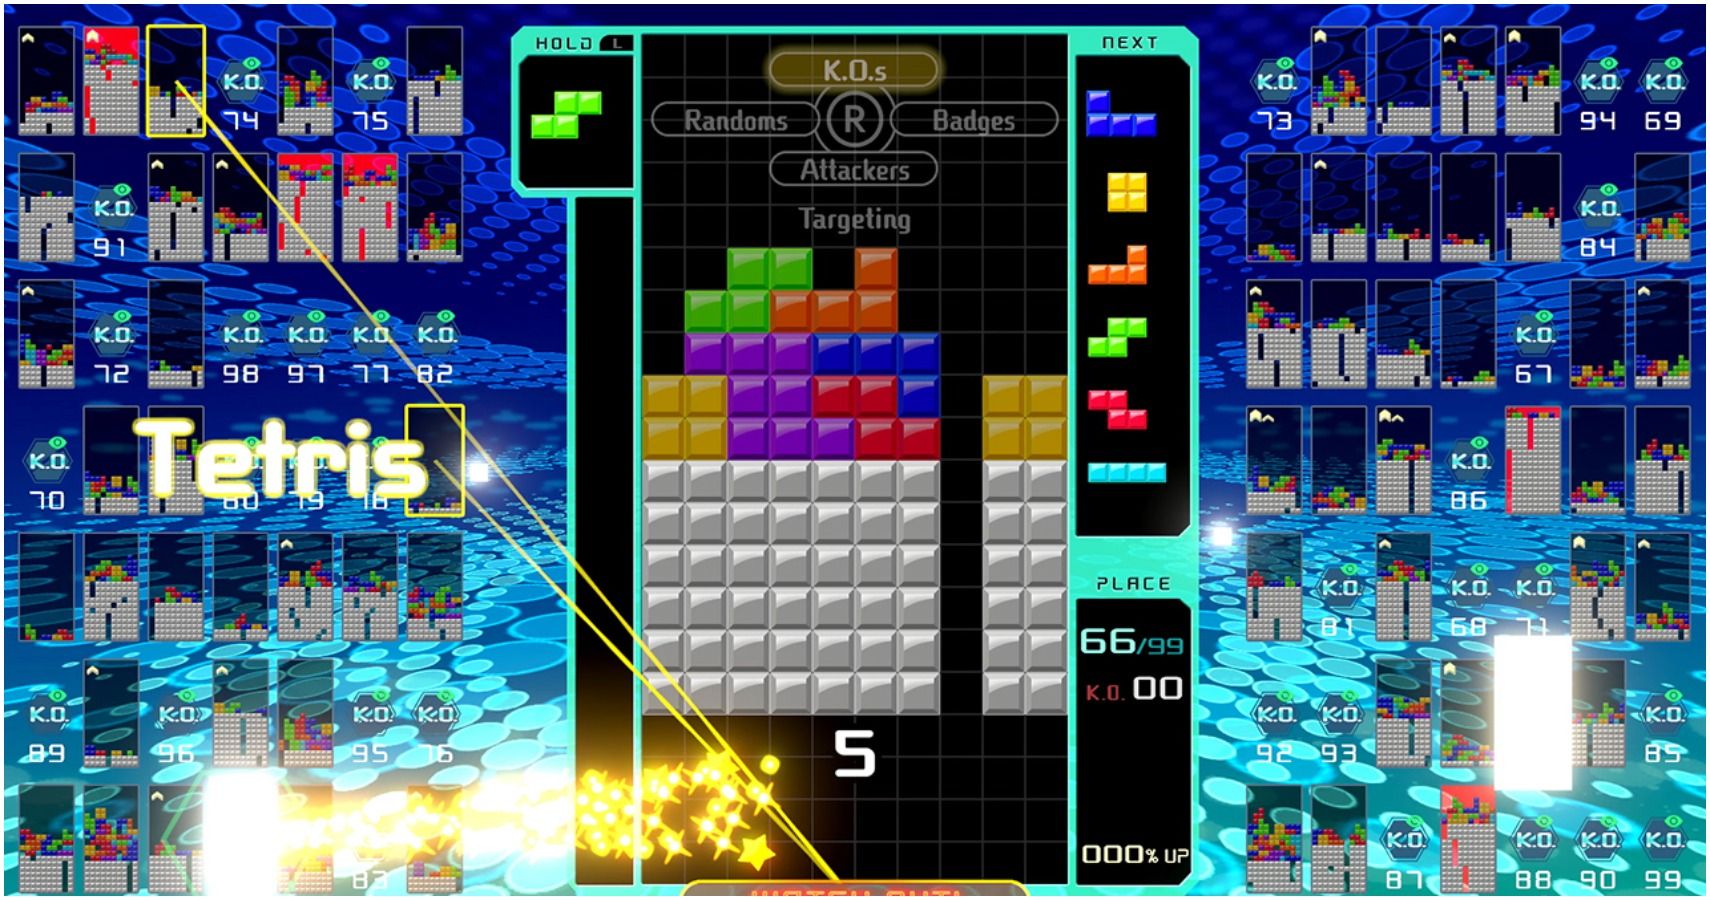 Tetris 99 Gets An Offline Mode As Paid DLC; New Tournament Offers Classic GB Skin As Prize